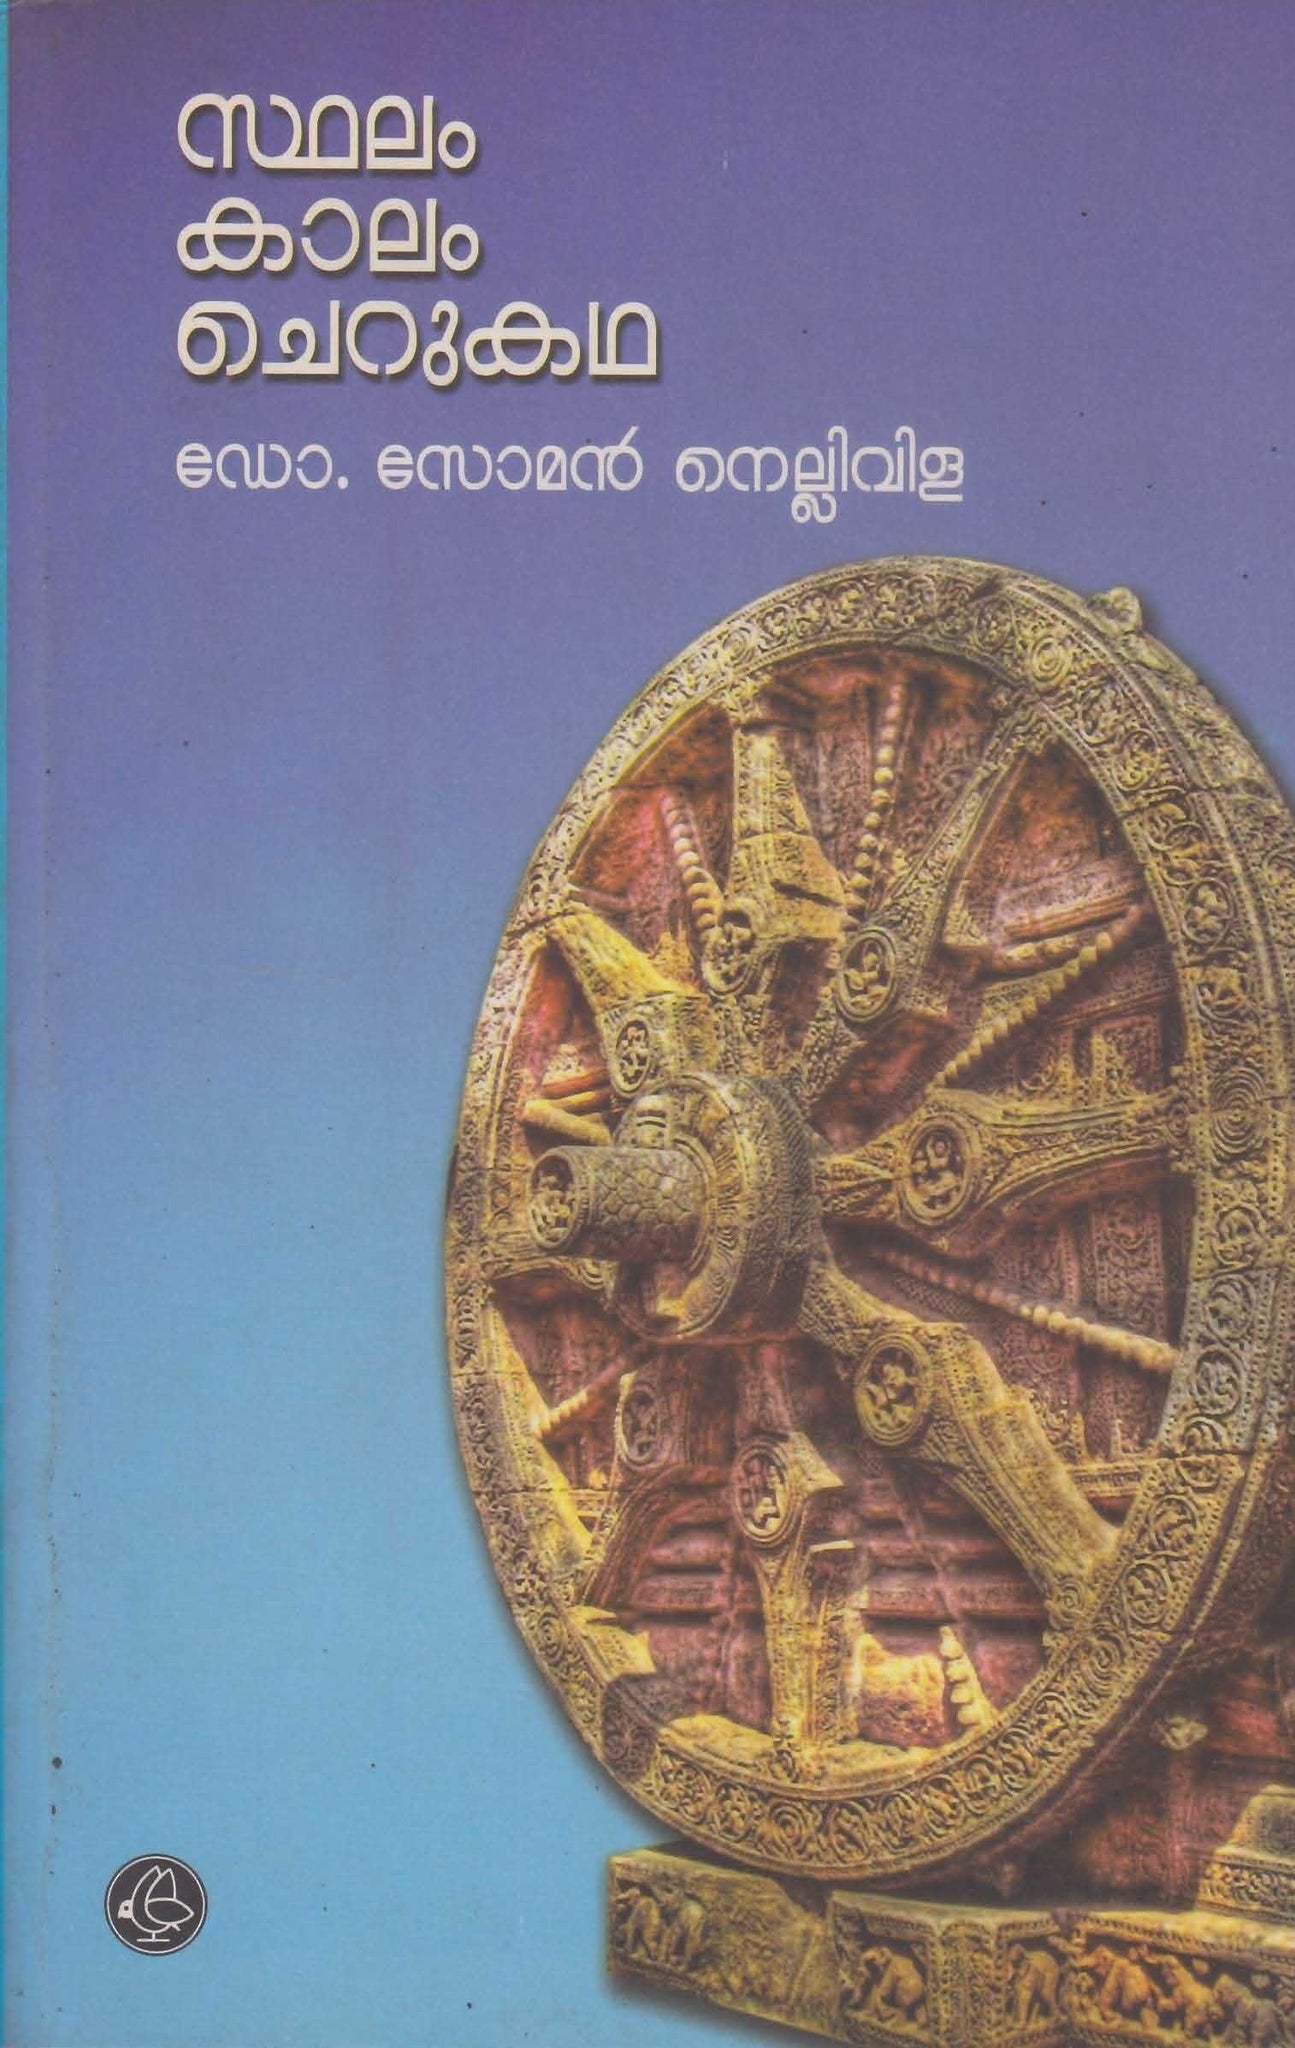 STHALAM KAALAM CHERUKATHA - TheBookAddicts